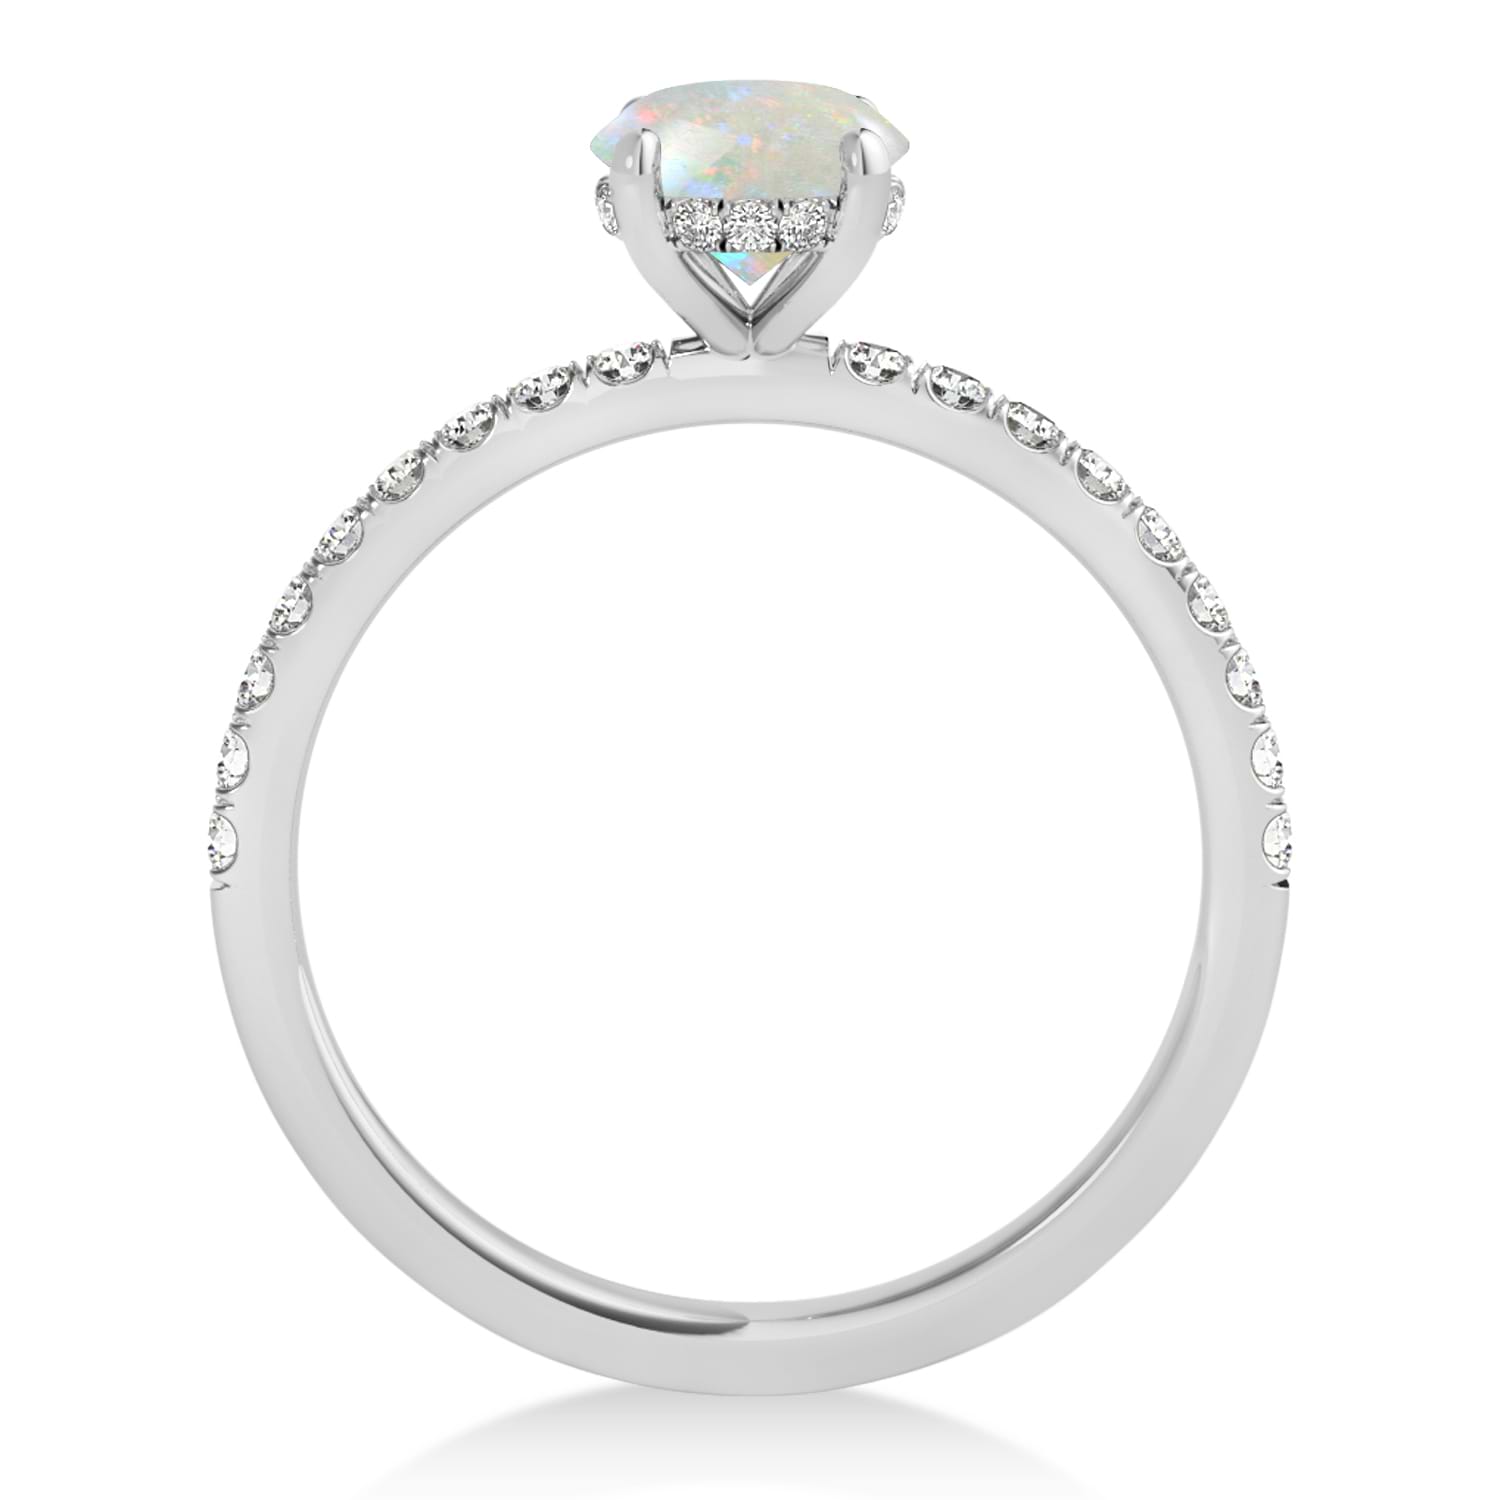 Round Opal & Diamond Single Row Hidden Halo Engagement Ring 18k White Gold (1.25ct)